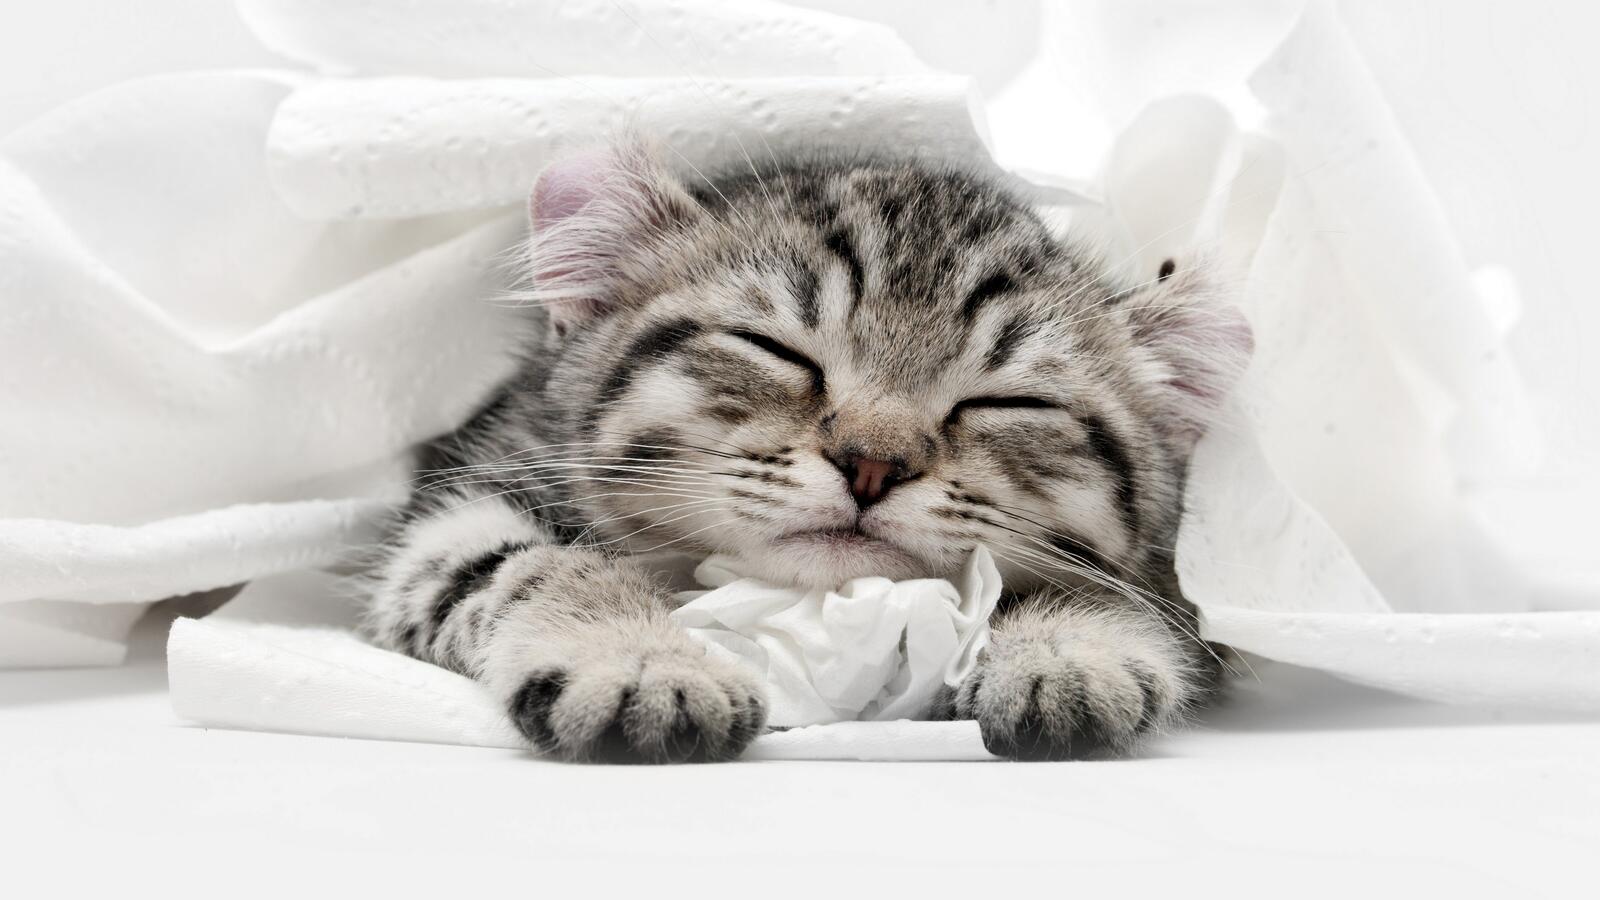 Free photo A little kitten fell asleep soundly under a white blanket